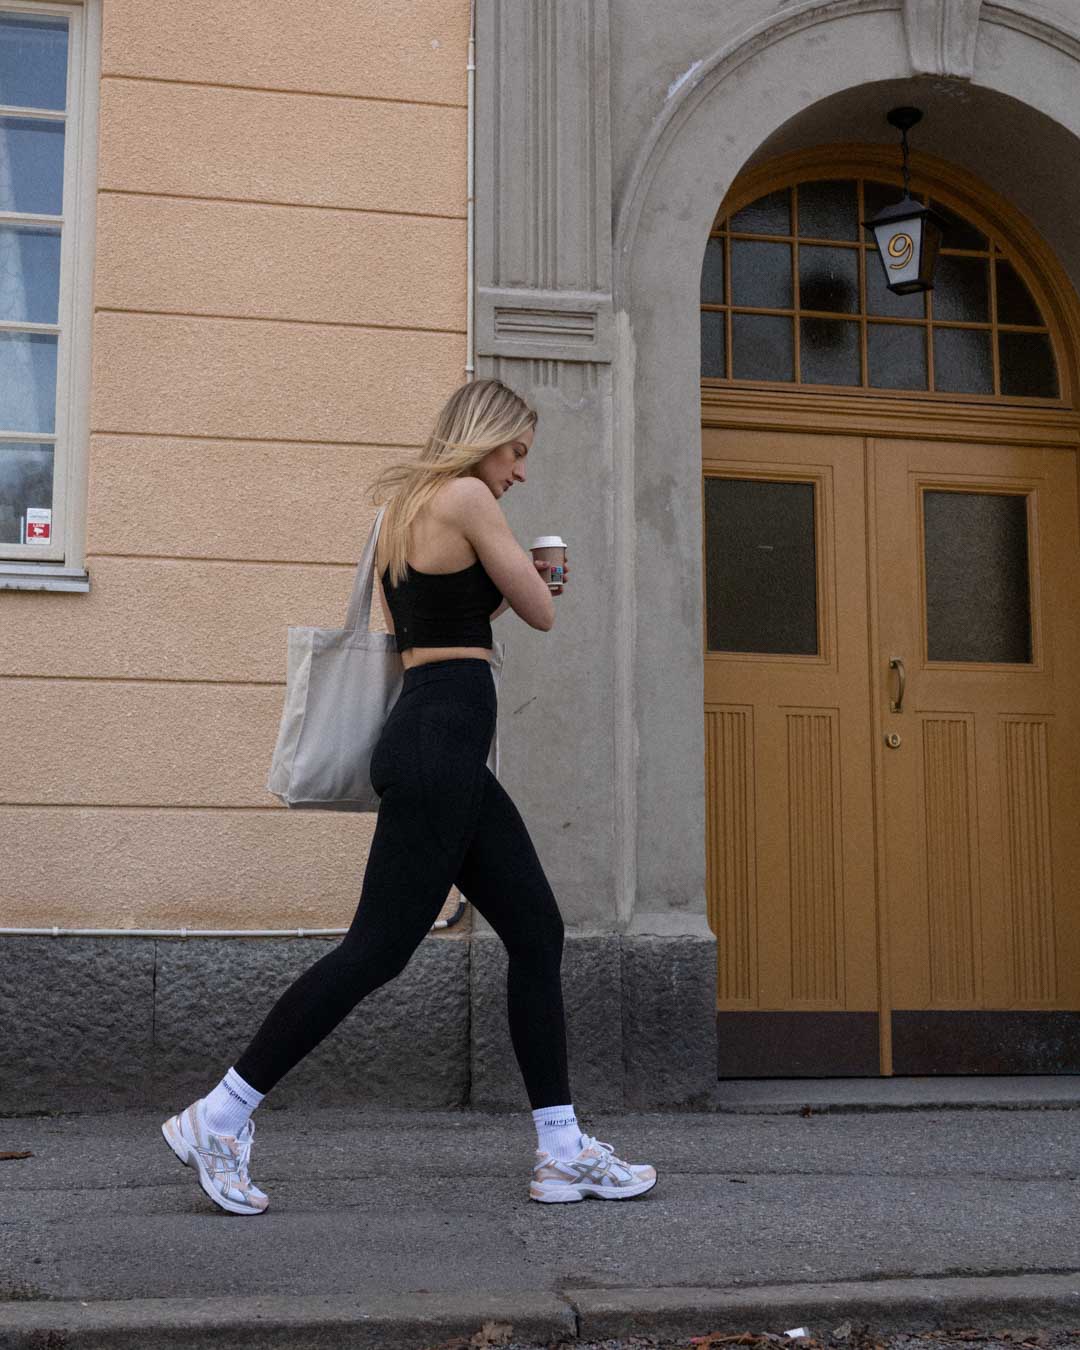 Blonde woman in sports leggings and sports bra walking down a Stockholm street